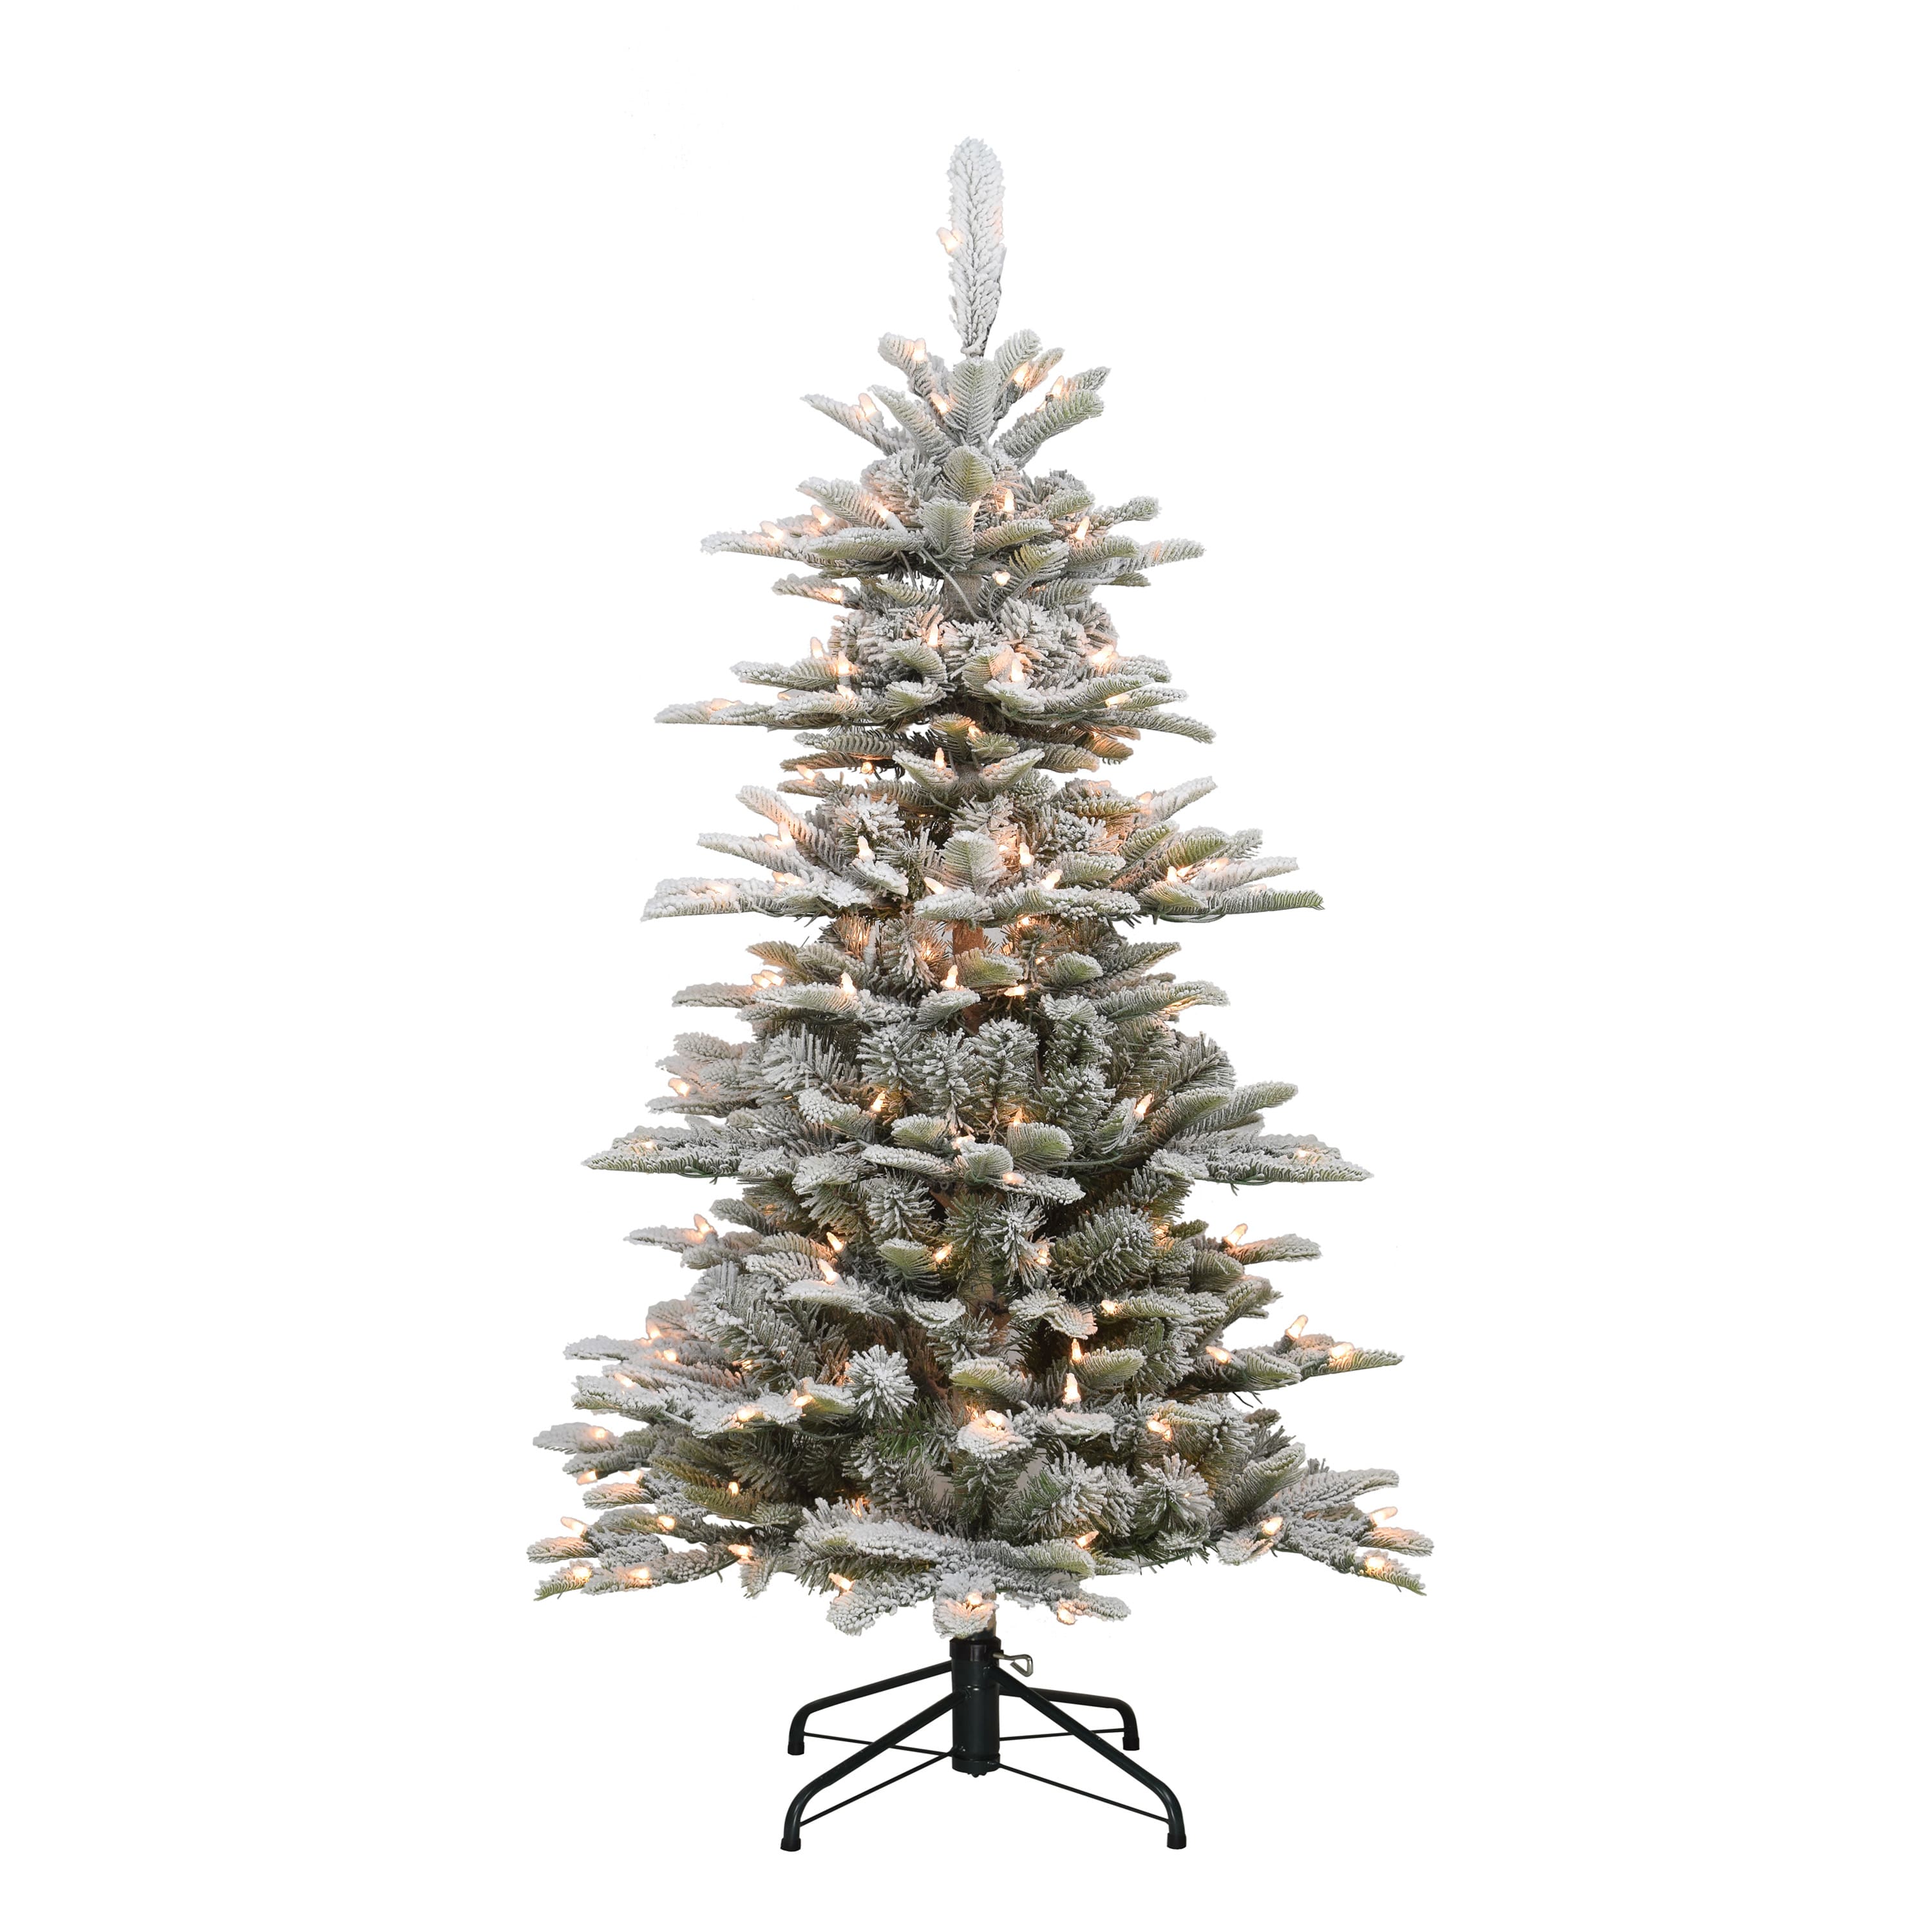 6 Pack: 4.5ft. Pre-Lit Slim Flocked Aspen Fir Artificial Christmas Tree with 200 Lights, Green